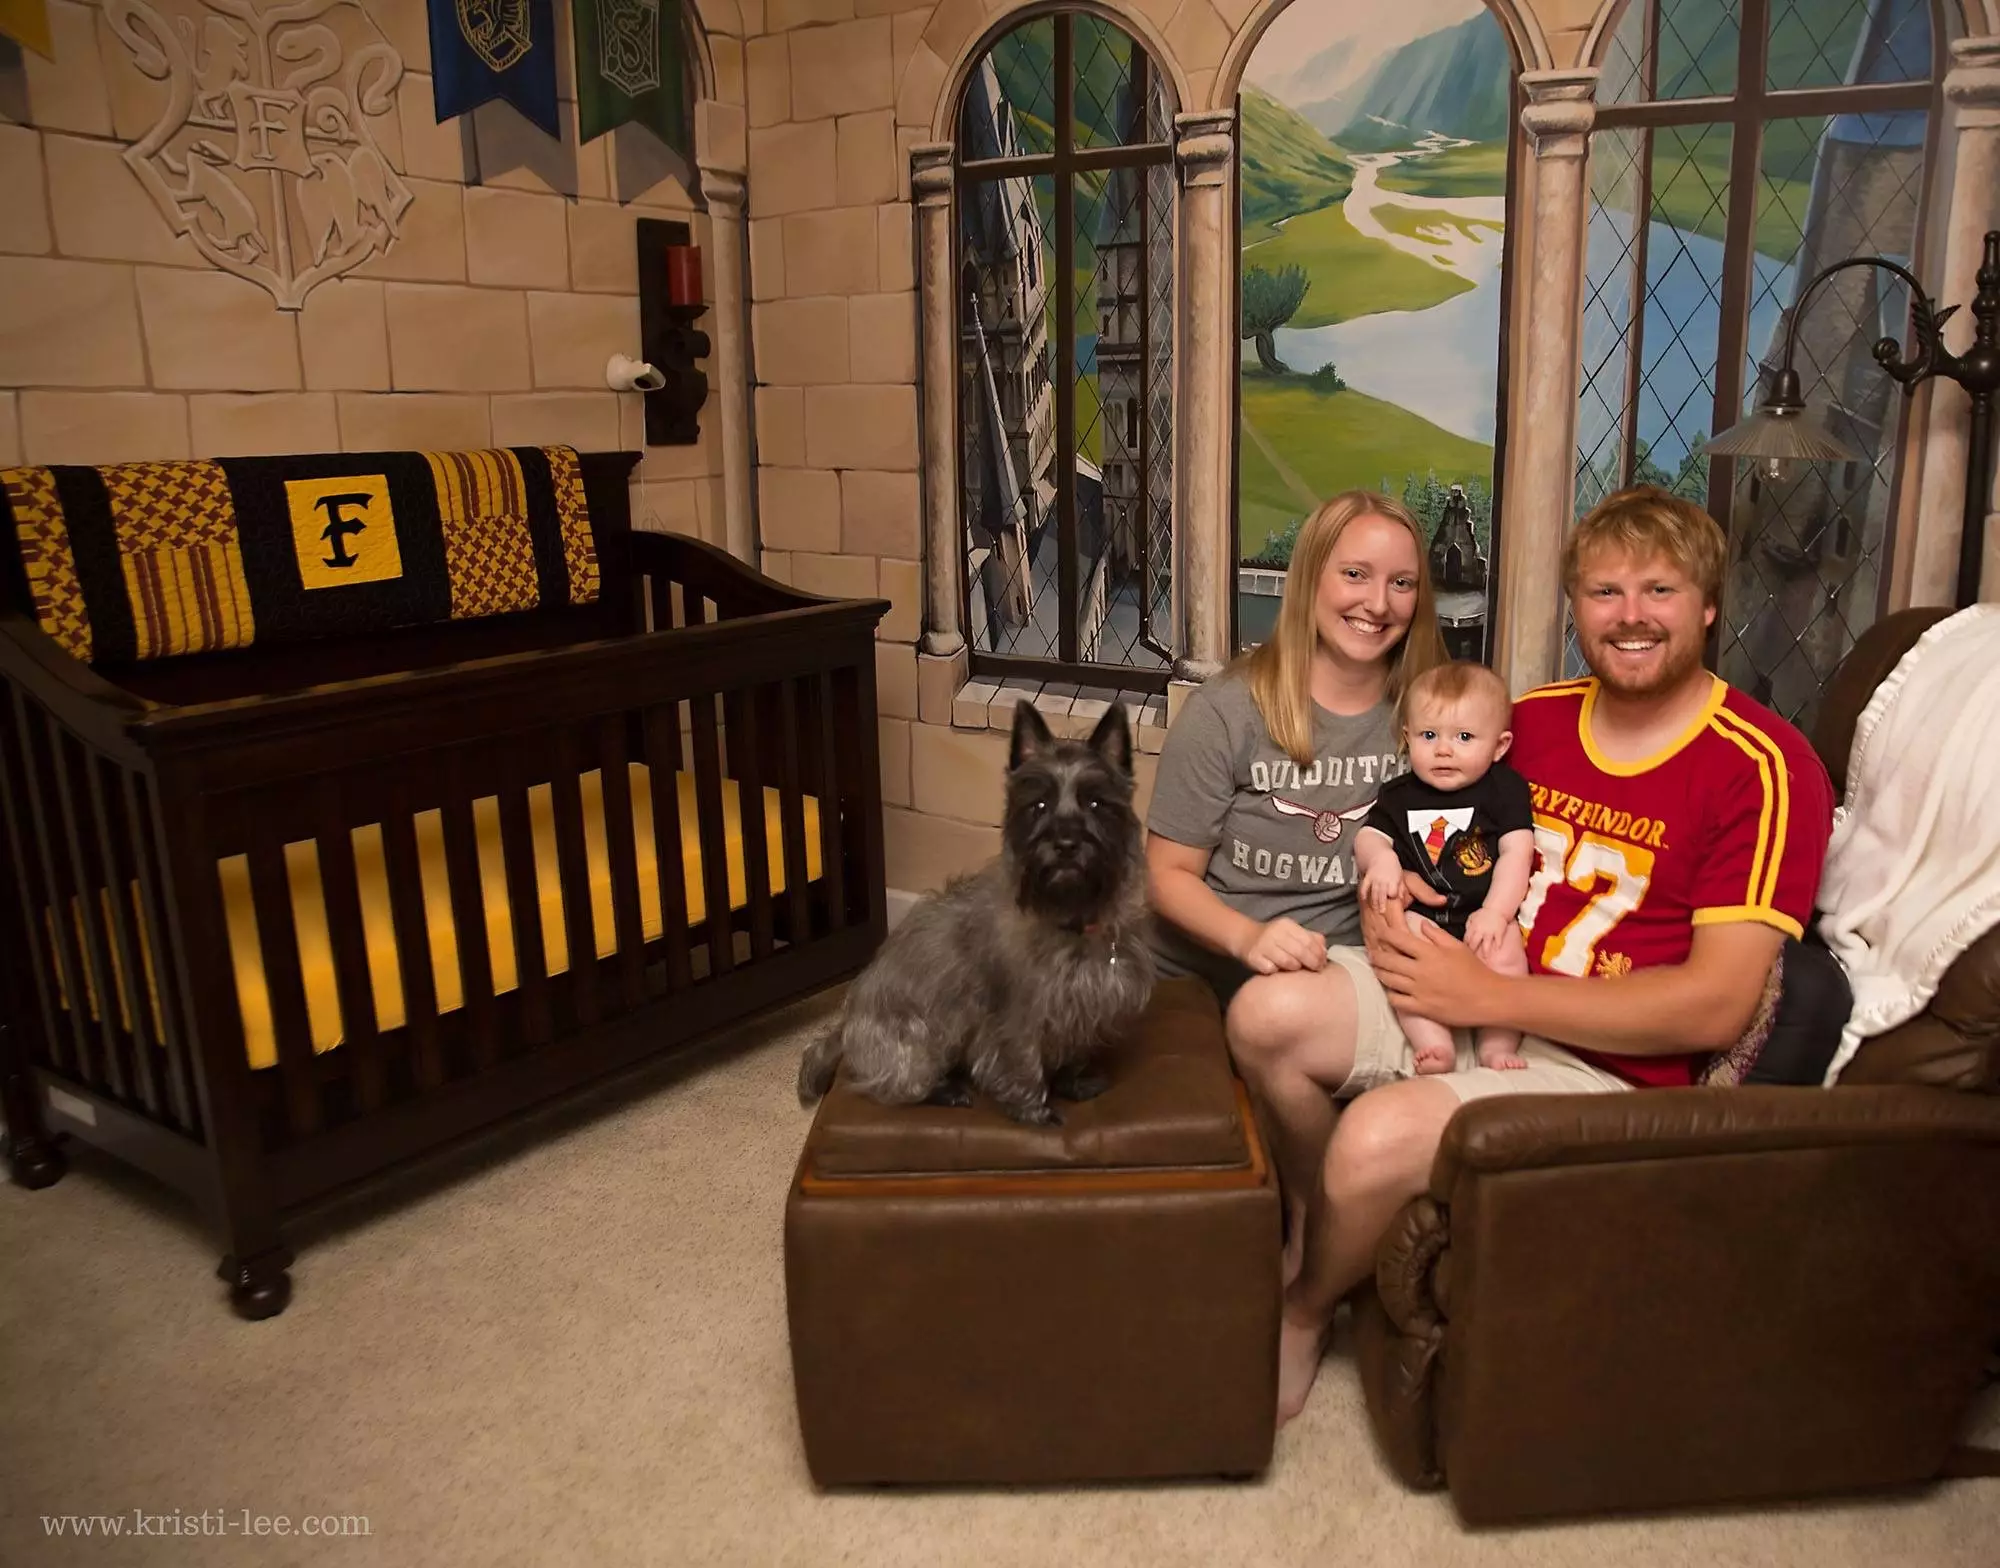 Casey and Kaycee created the nursery for their son Finley (